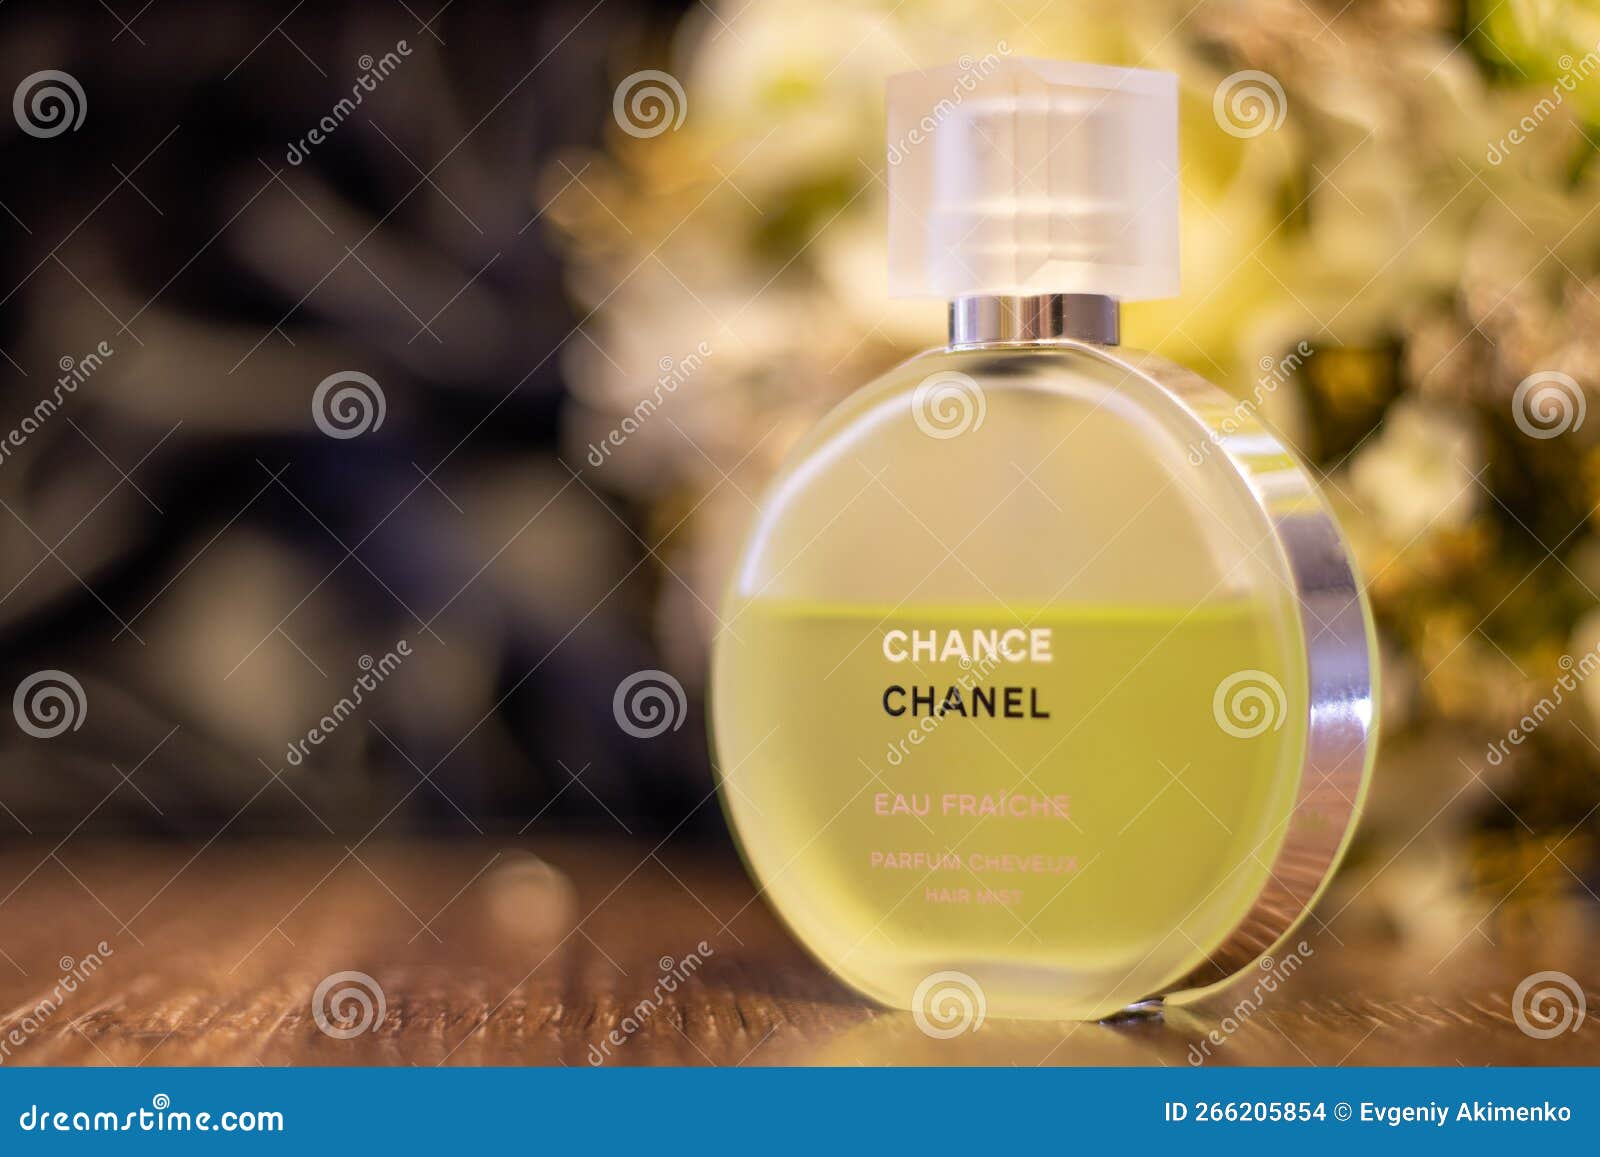 CHANEL Chance Hair Mist Reviews 2023